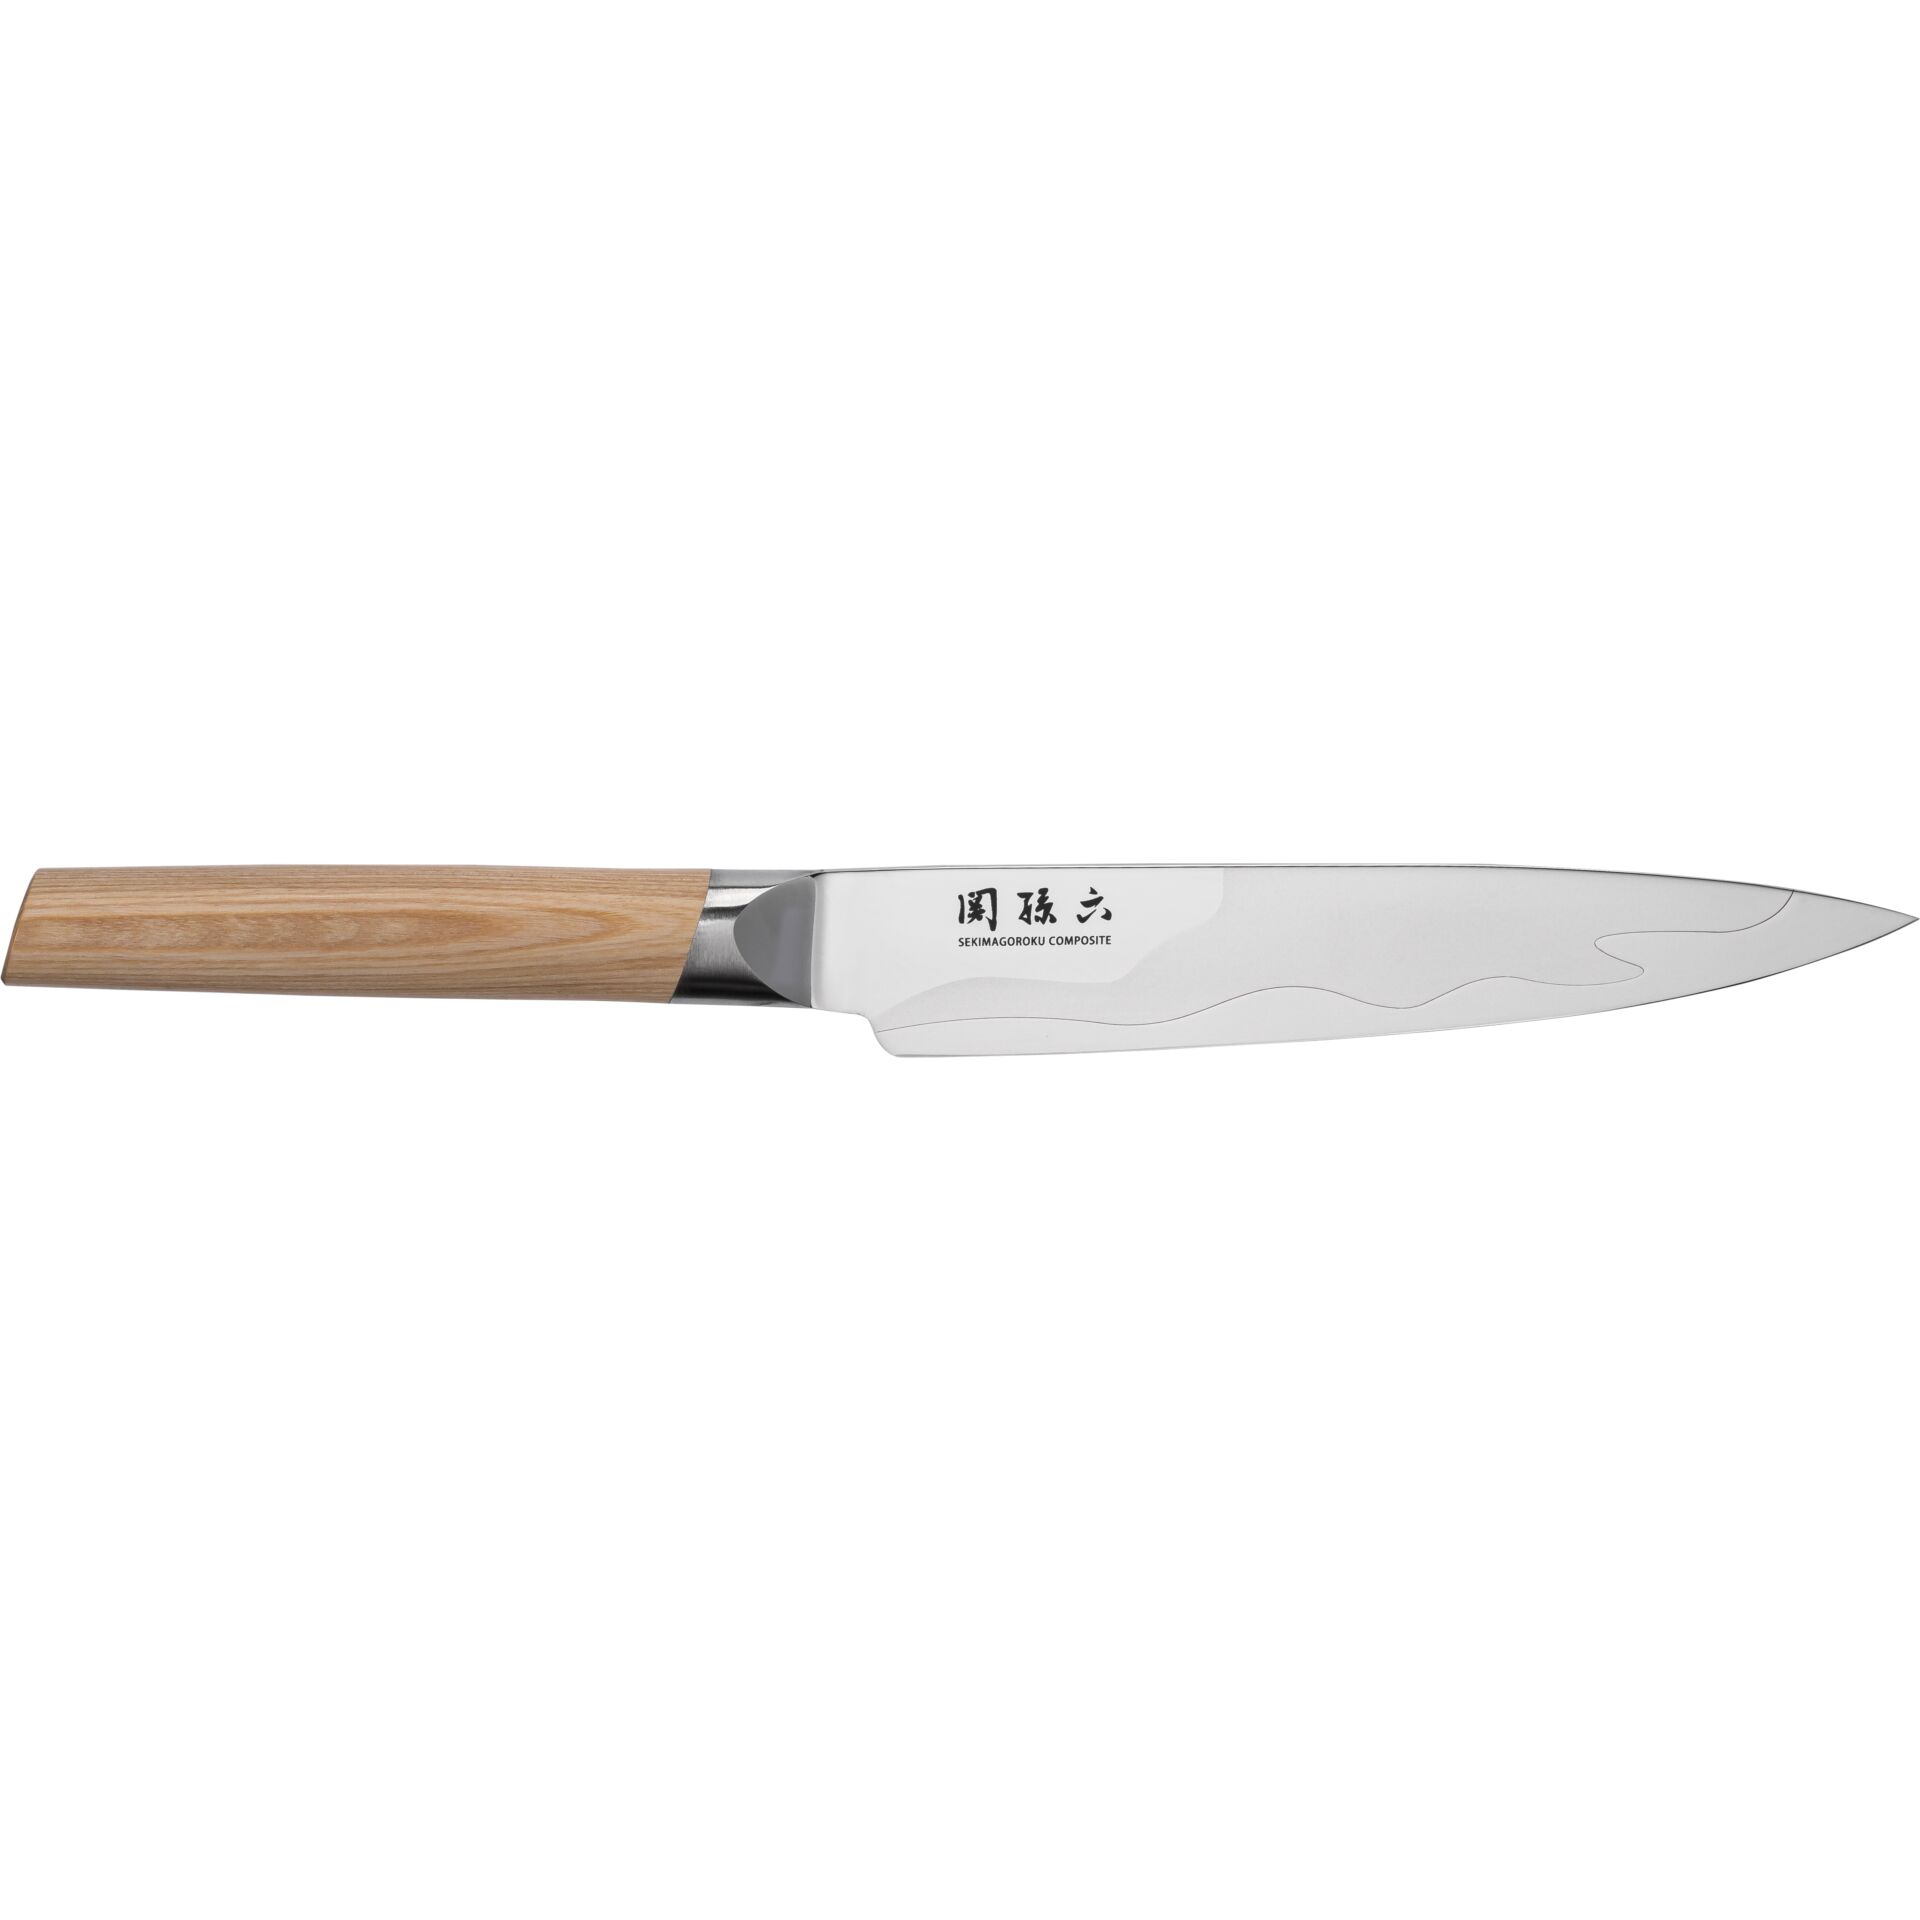 KAI Seki Magoroku Composite coltello da carne, 18 cm